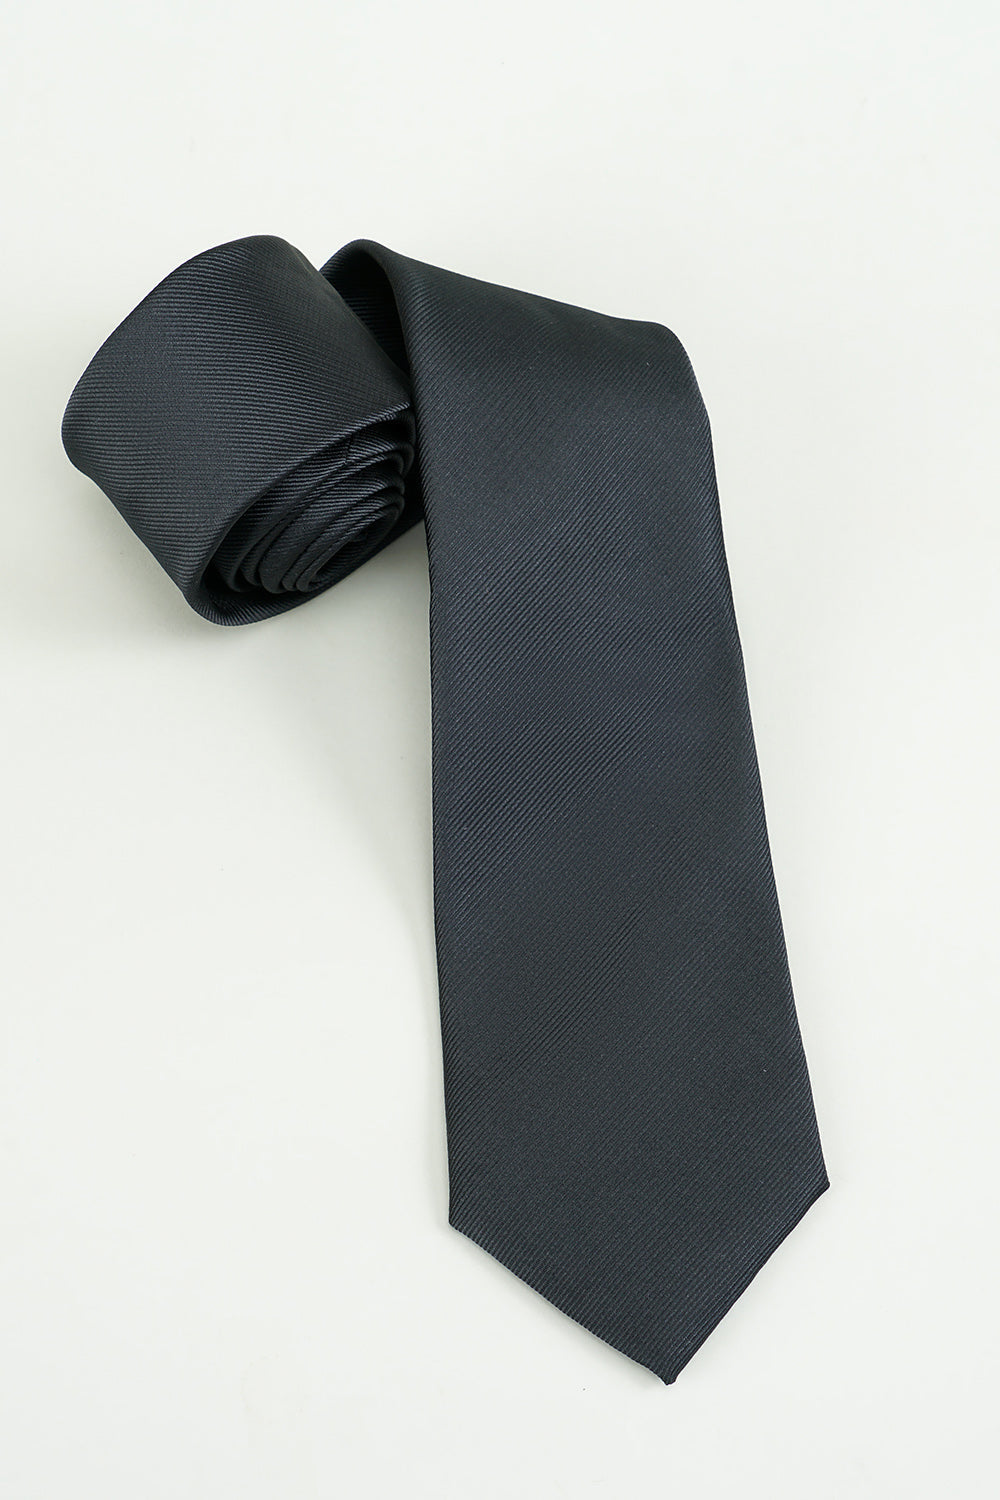 Schwarze, solide satinierte Party krawatte